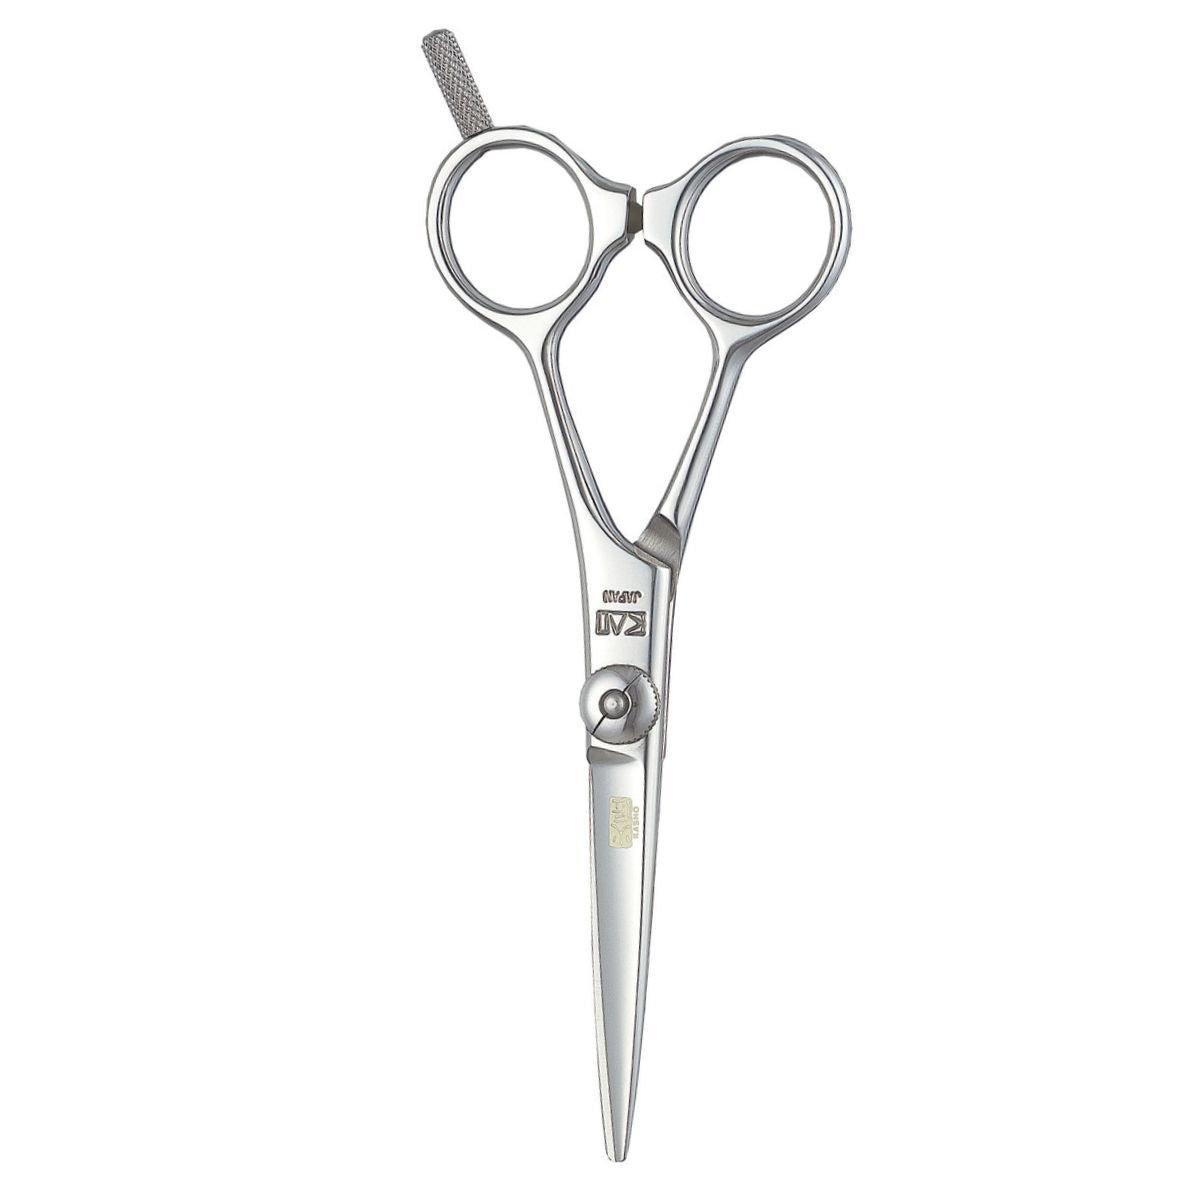 Kasho Ivory Straight Hair Cutting Scissors - Japan Scissors